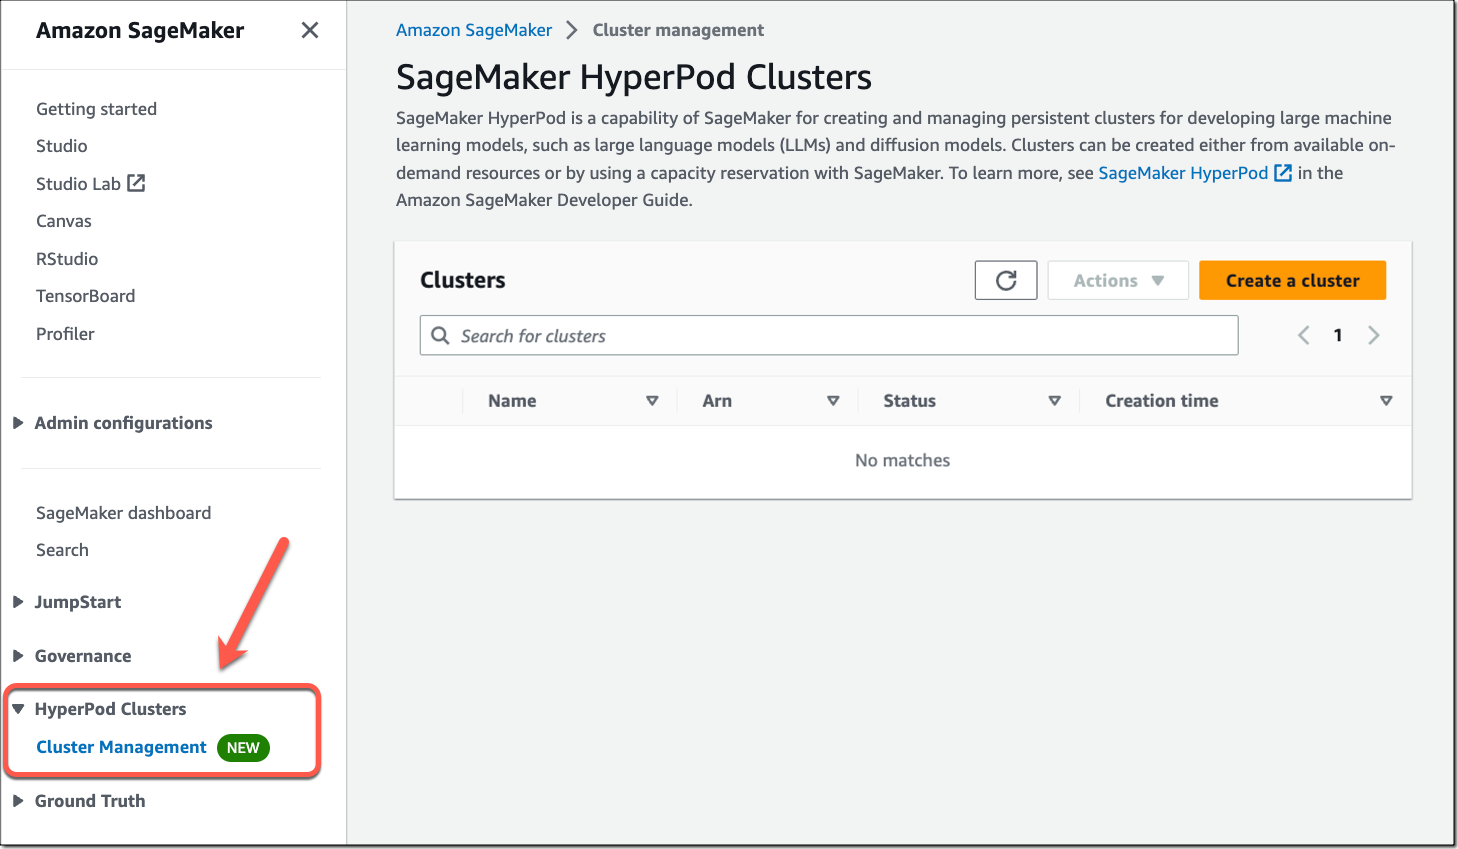 Amazon SageMaker HyperPod Clusters